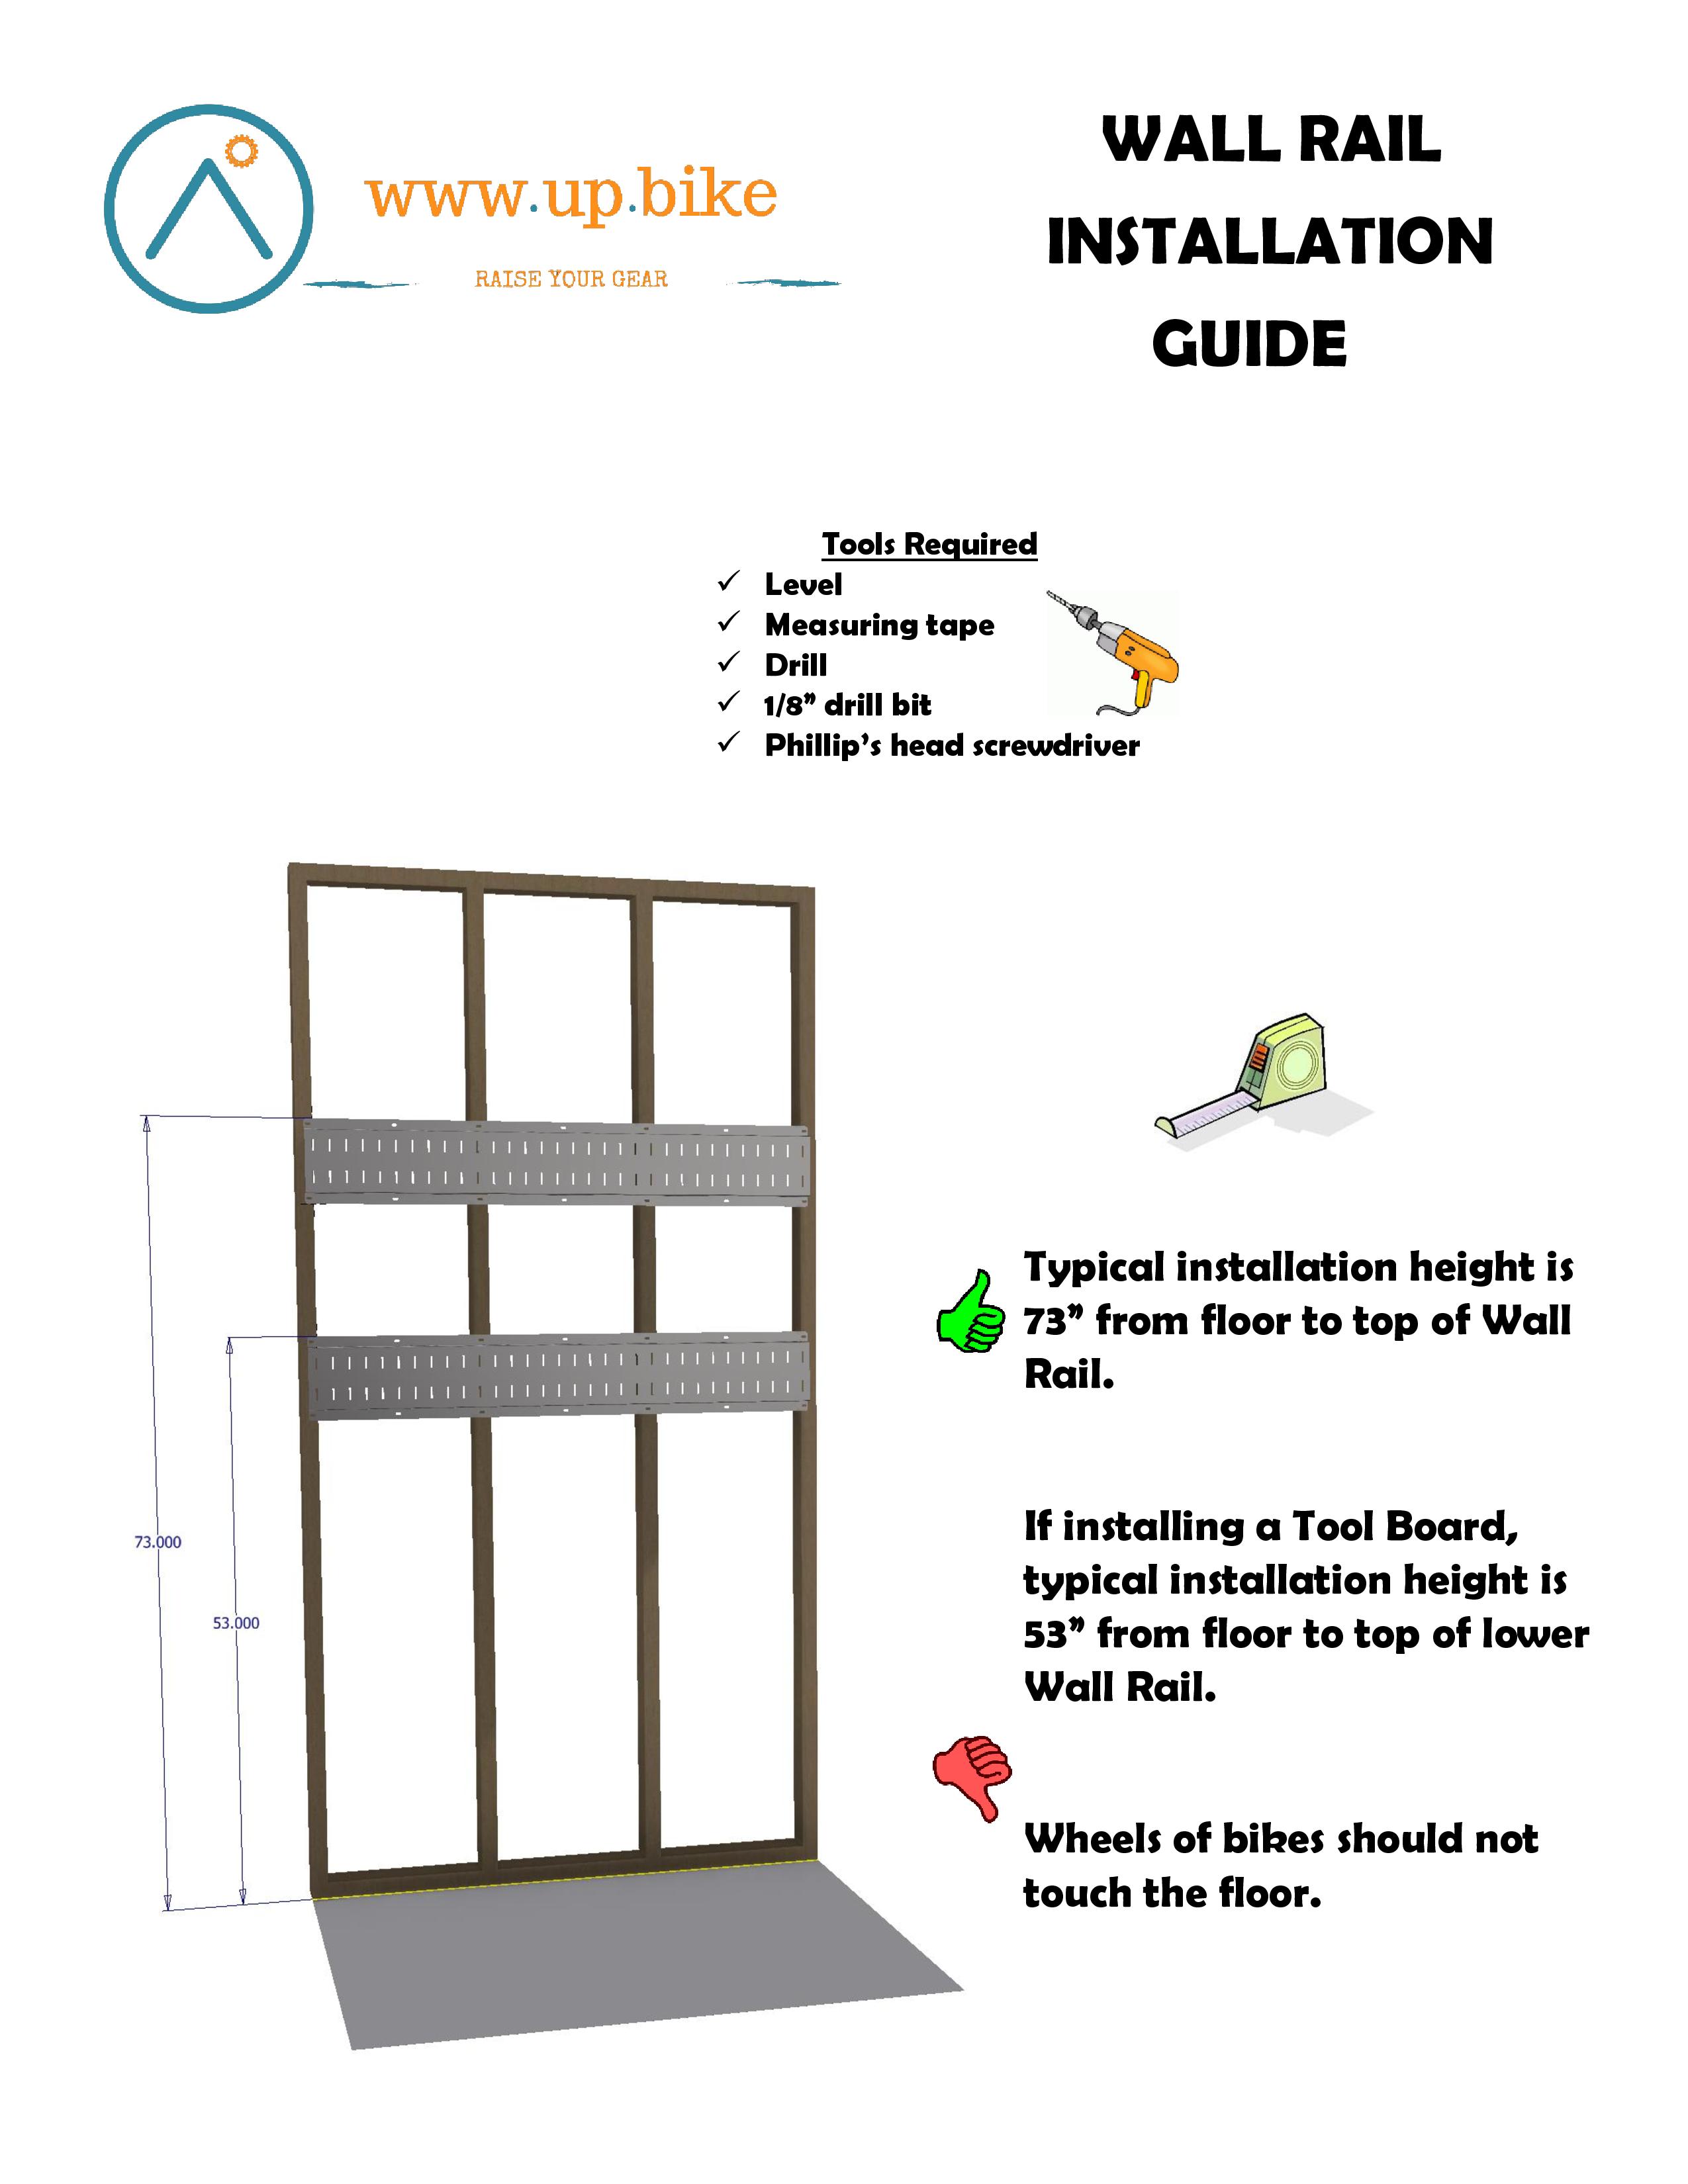 up.bike-wall-rail-installation-guide-2-page-001.jpg